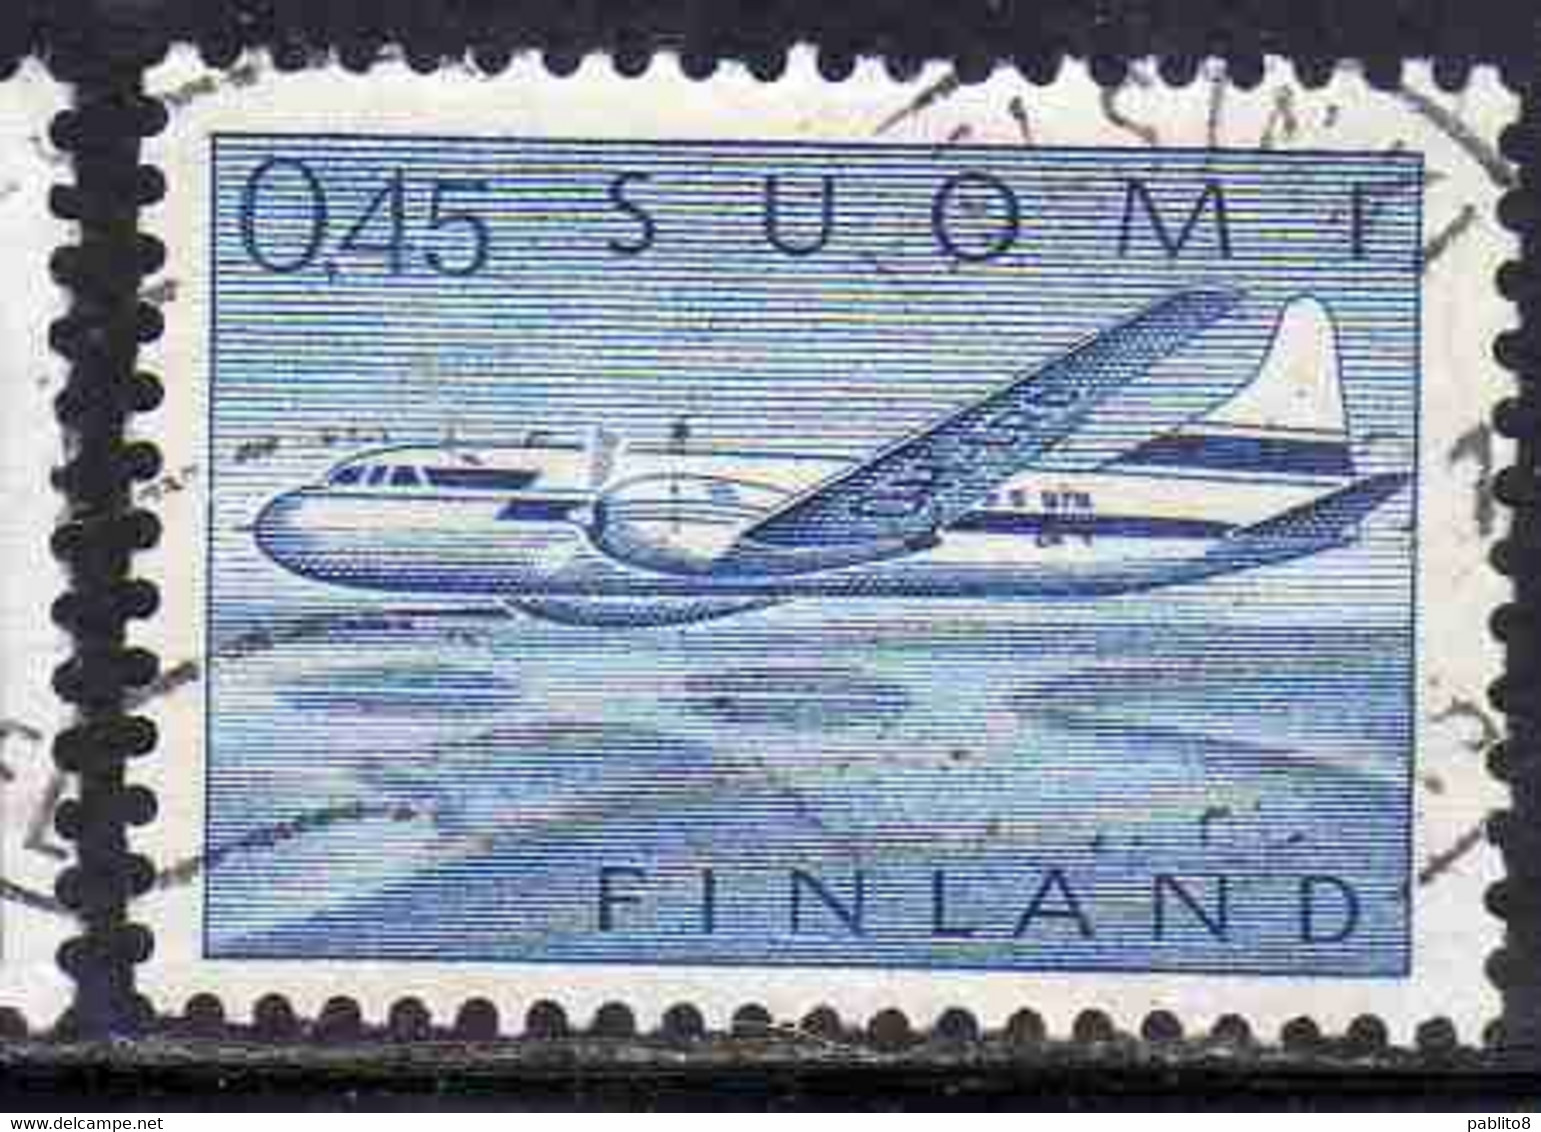 SUOMI FINLAND FINLANDIA FINLANDE 1963 AIR POST MAIL AIRMAIL CONVAIR OVER LAKES 0.45m 45p USED USATO OBLITERE' - Gebraucht